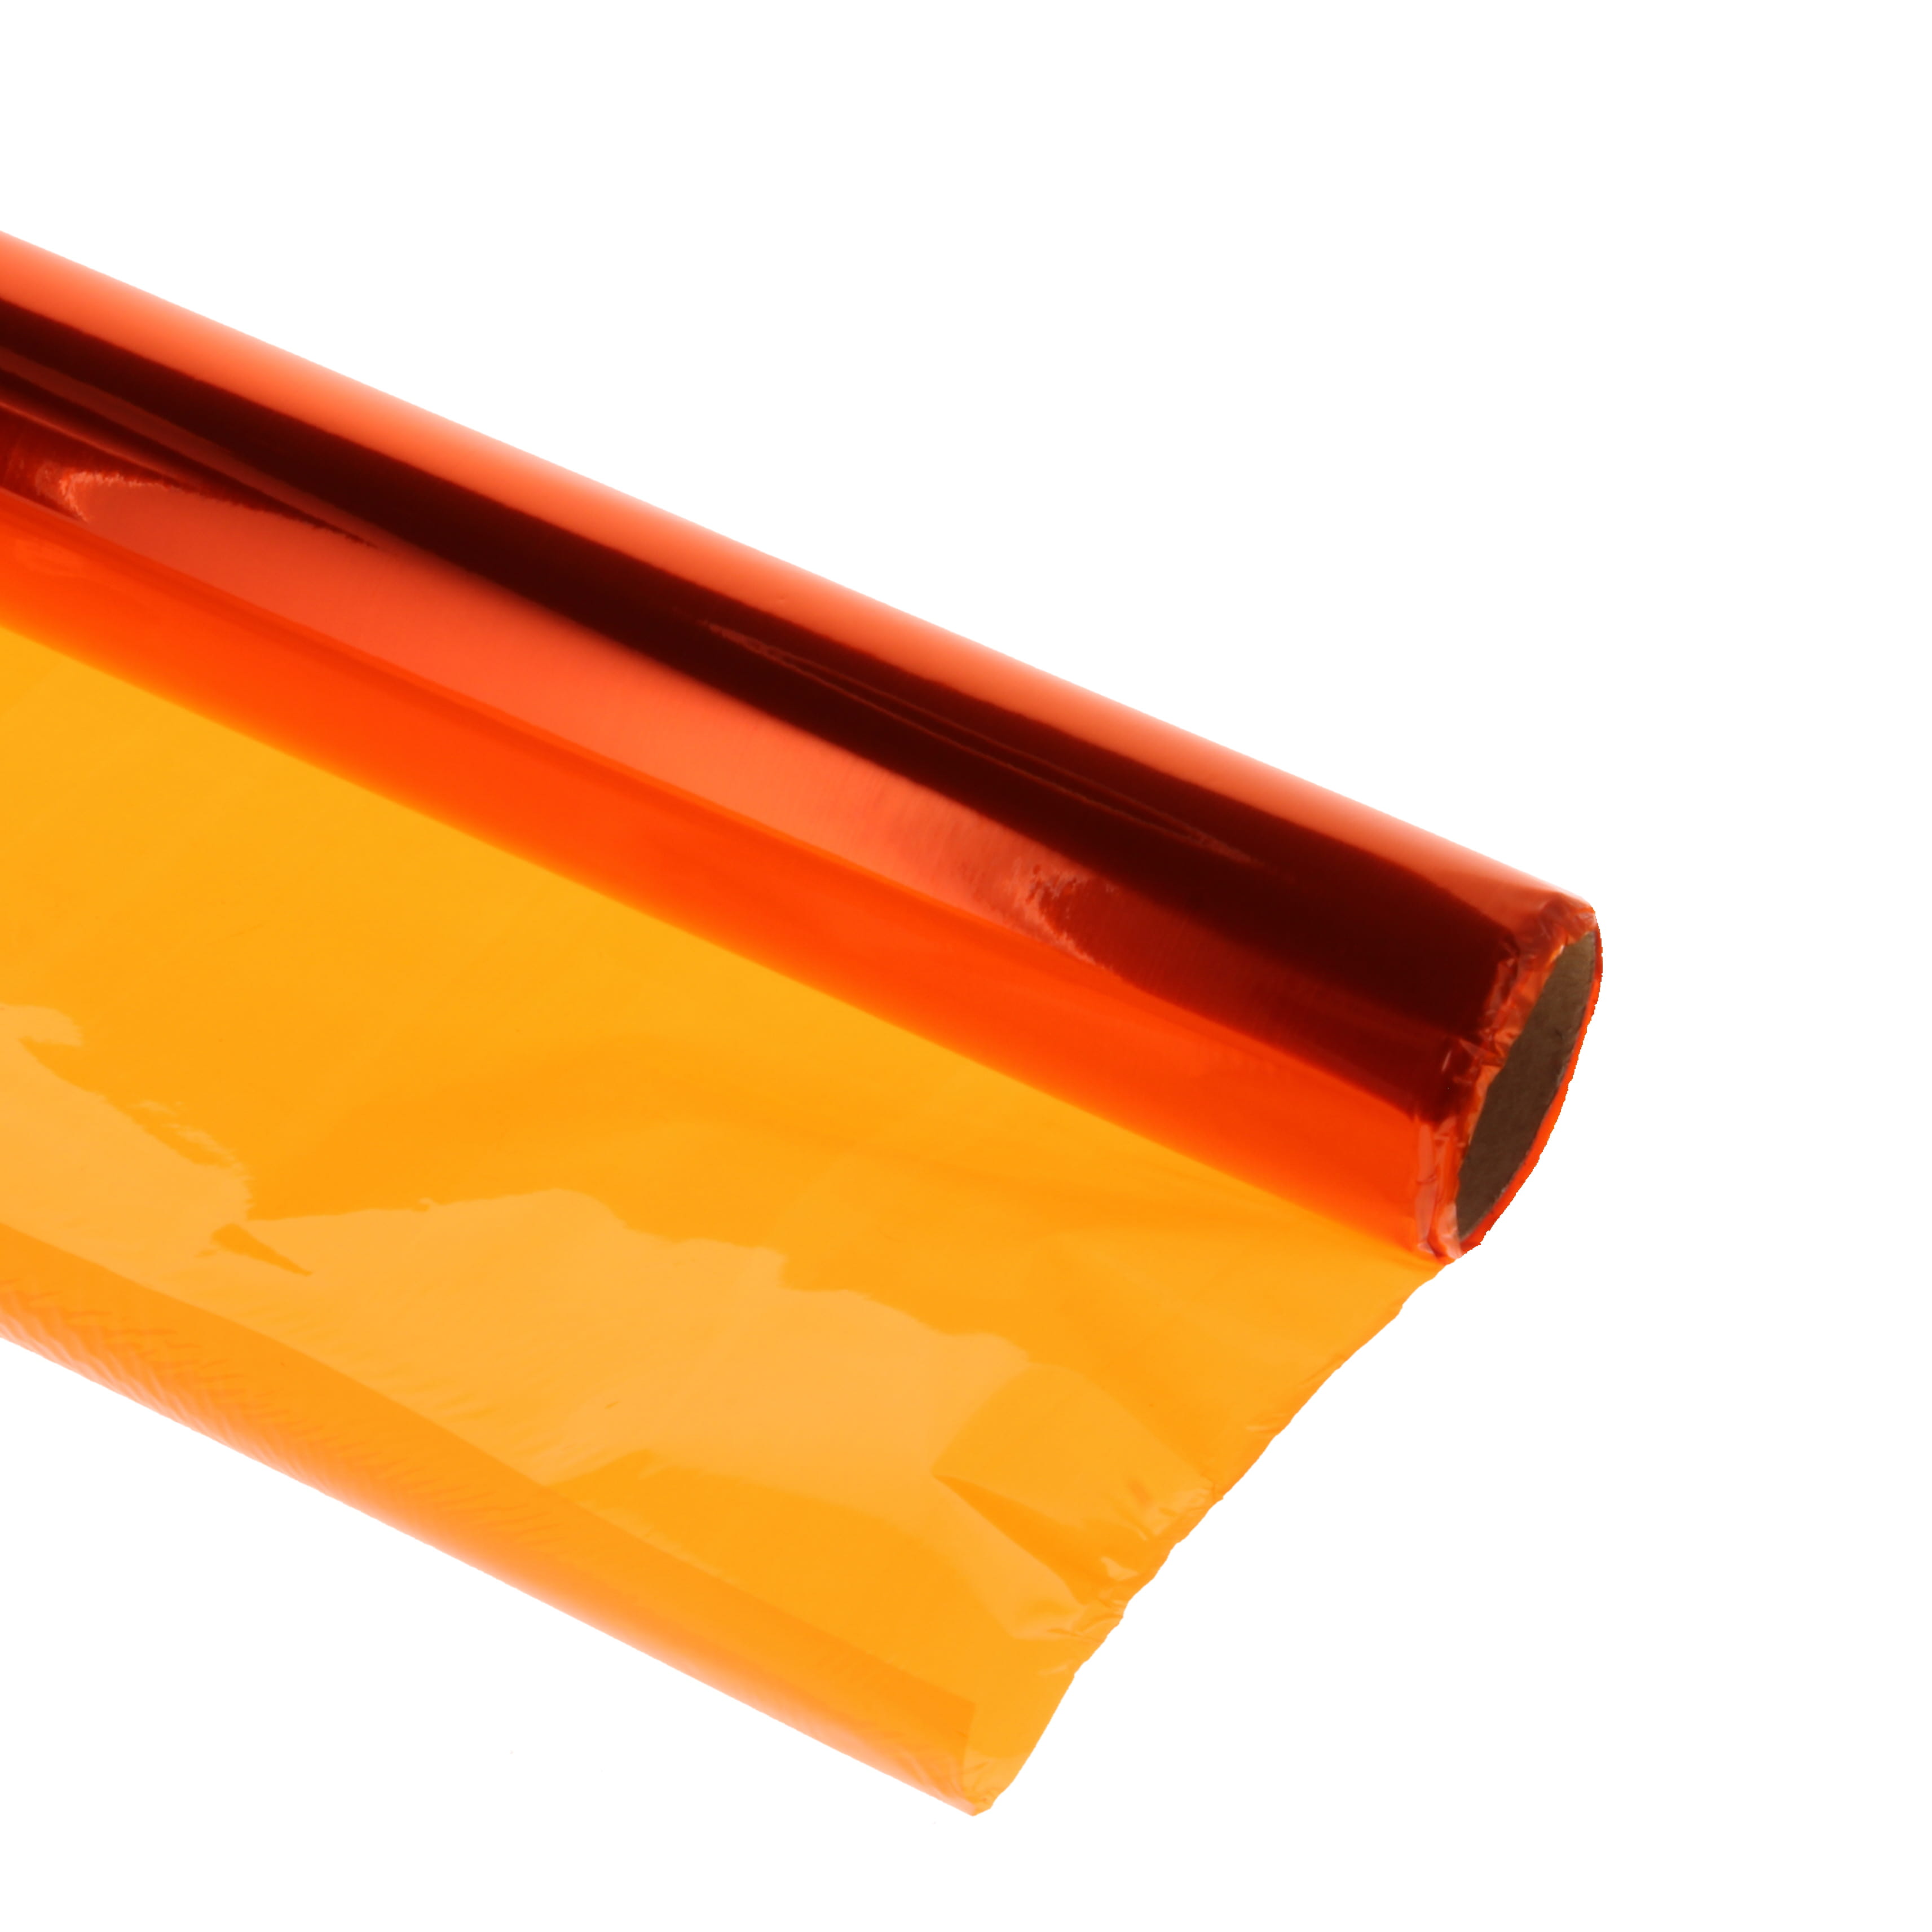 Cellophane Roll Orange - 508mm x 4.5m